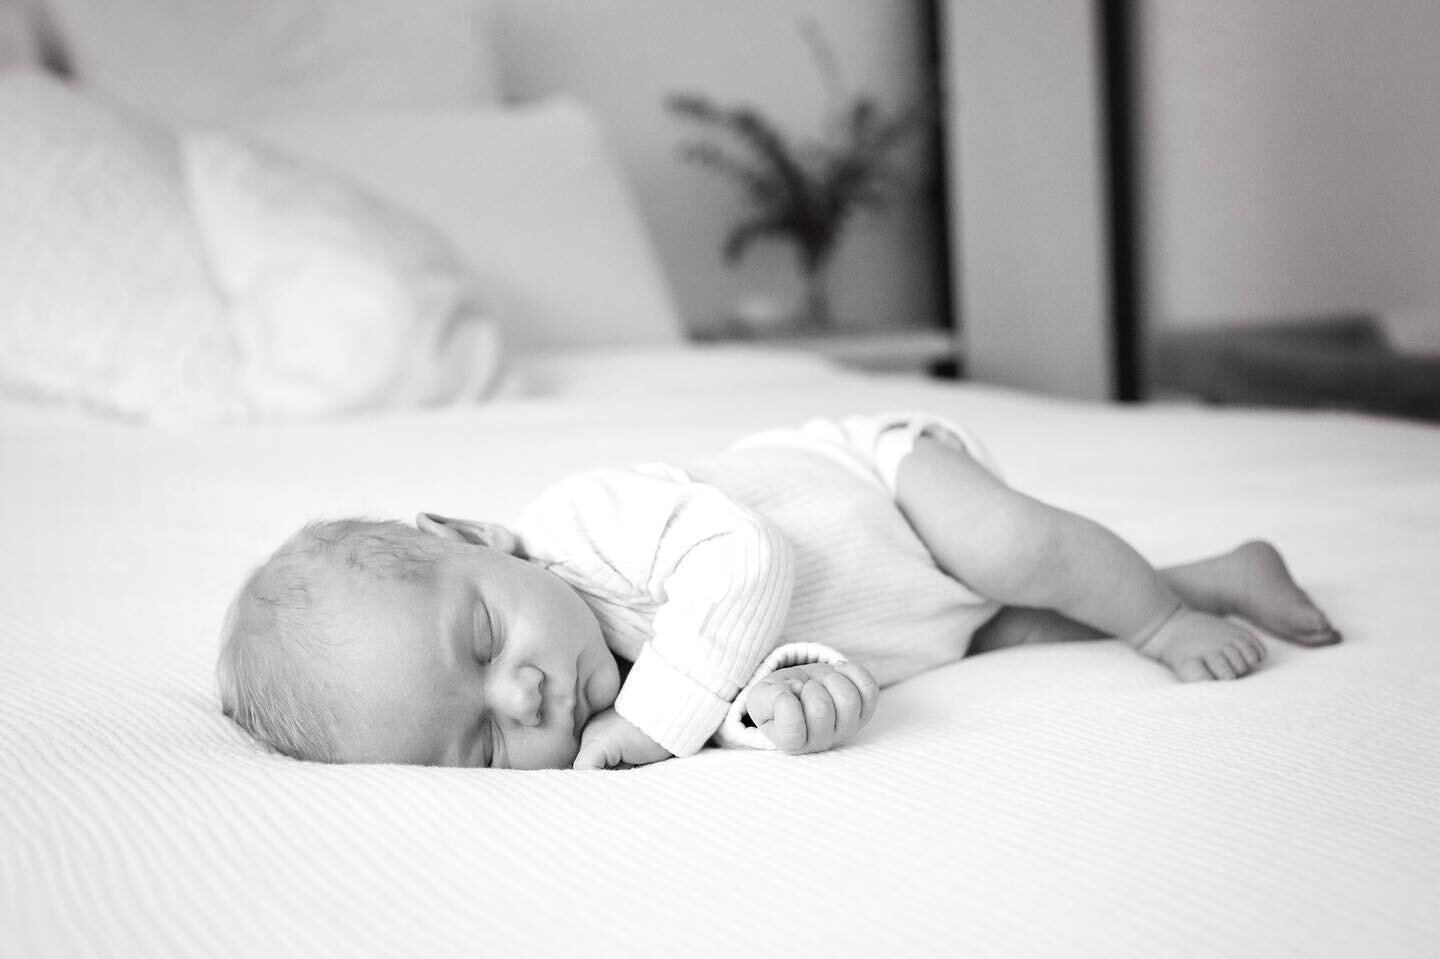 Sweet sweet sleepy baby

#newbornohotography #ocnewbornphotographer #staceystillphotography